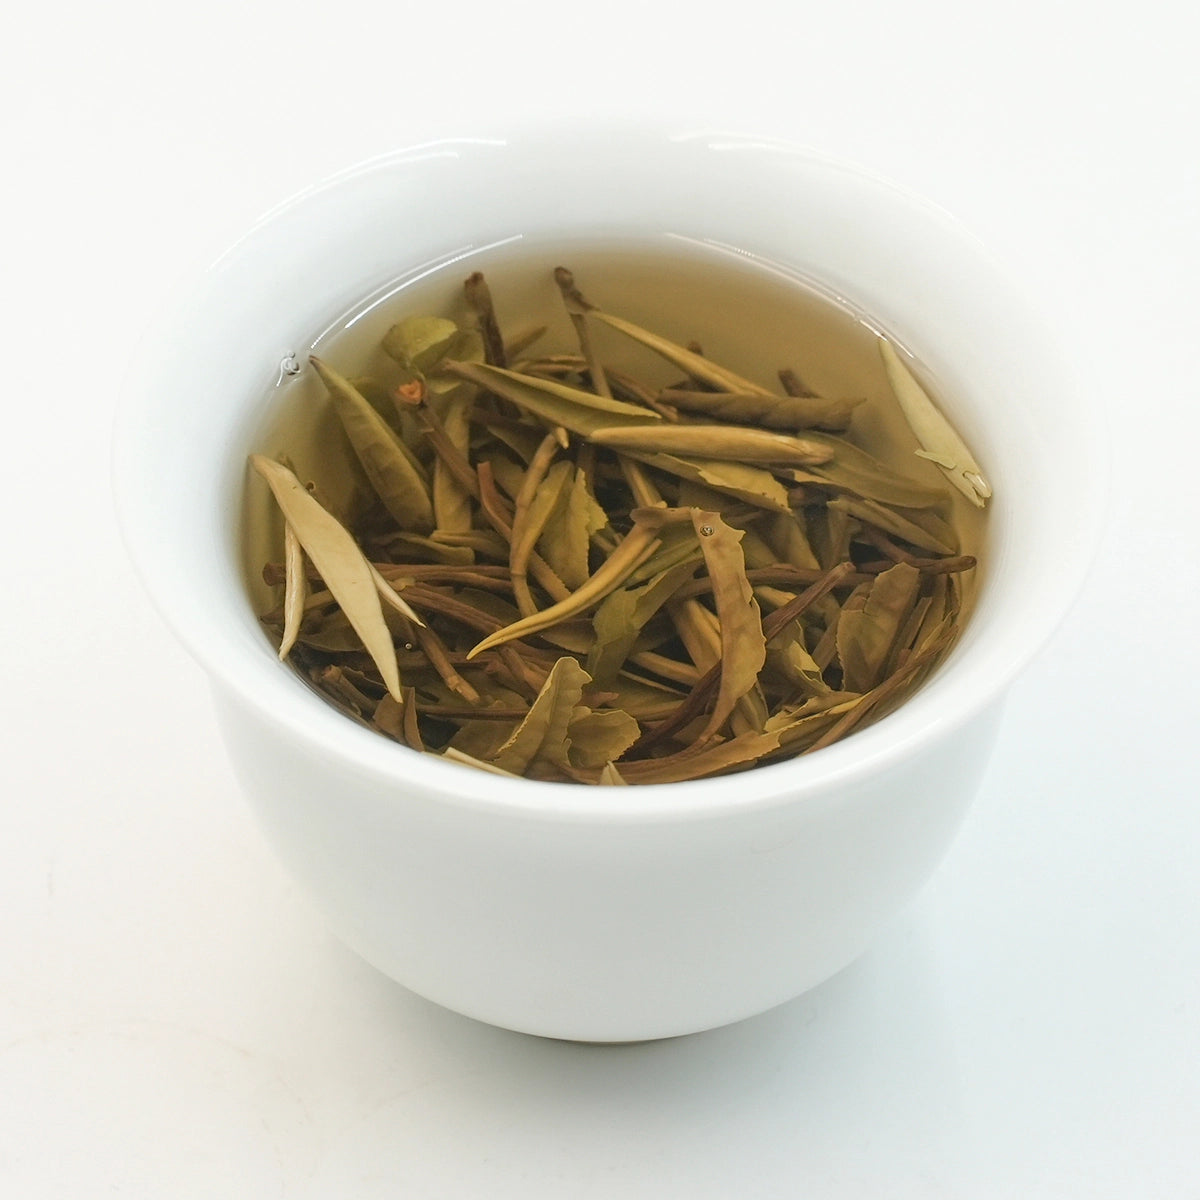 Chinese Wild White Tea